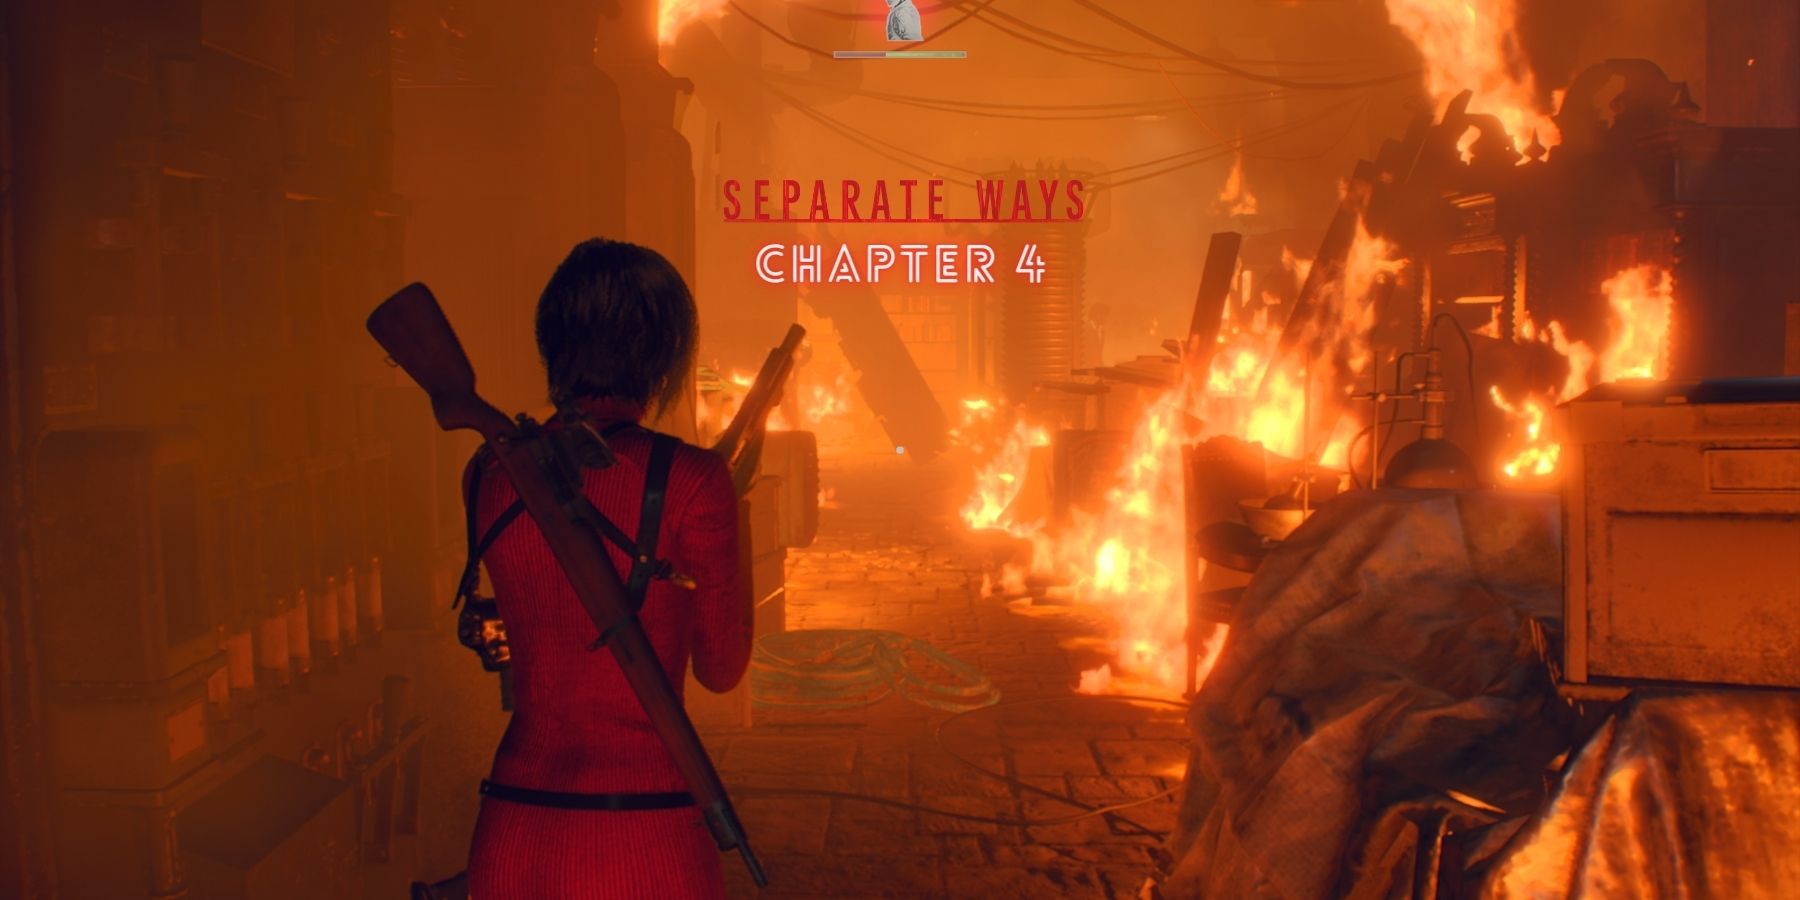 Separate Ways Chapter 4 Walkthrough - Resident Evil 4 Guide - IGN